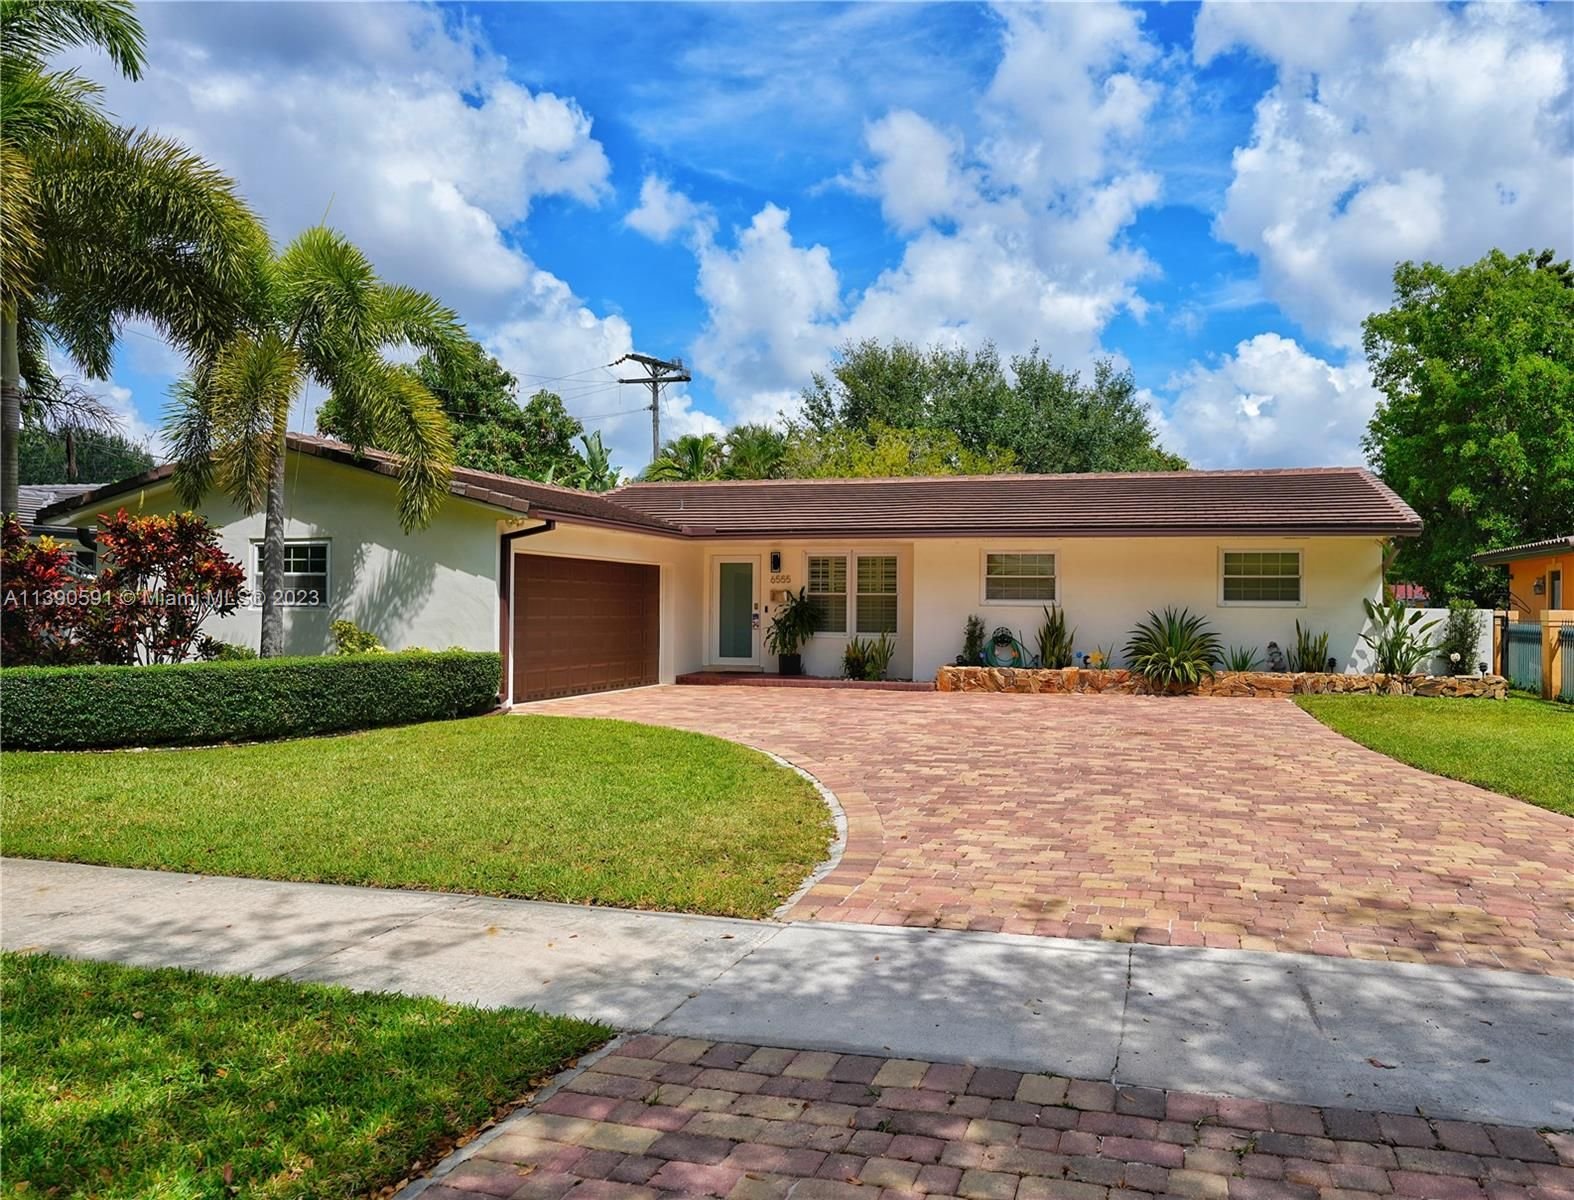 Real estate property located at 6555 Miami Lakeway S, Miami-Dade County, Miami Lakes, FL